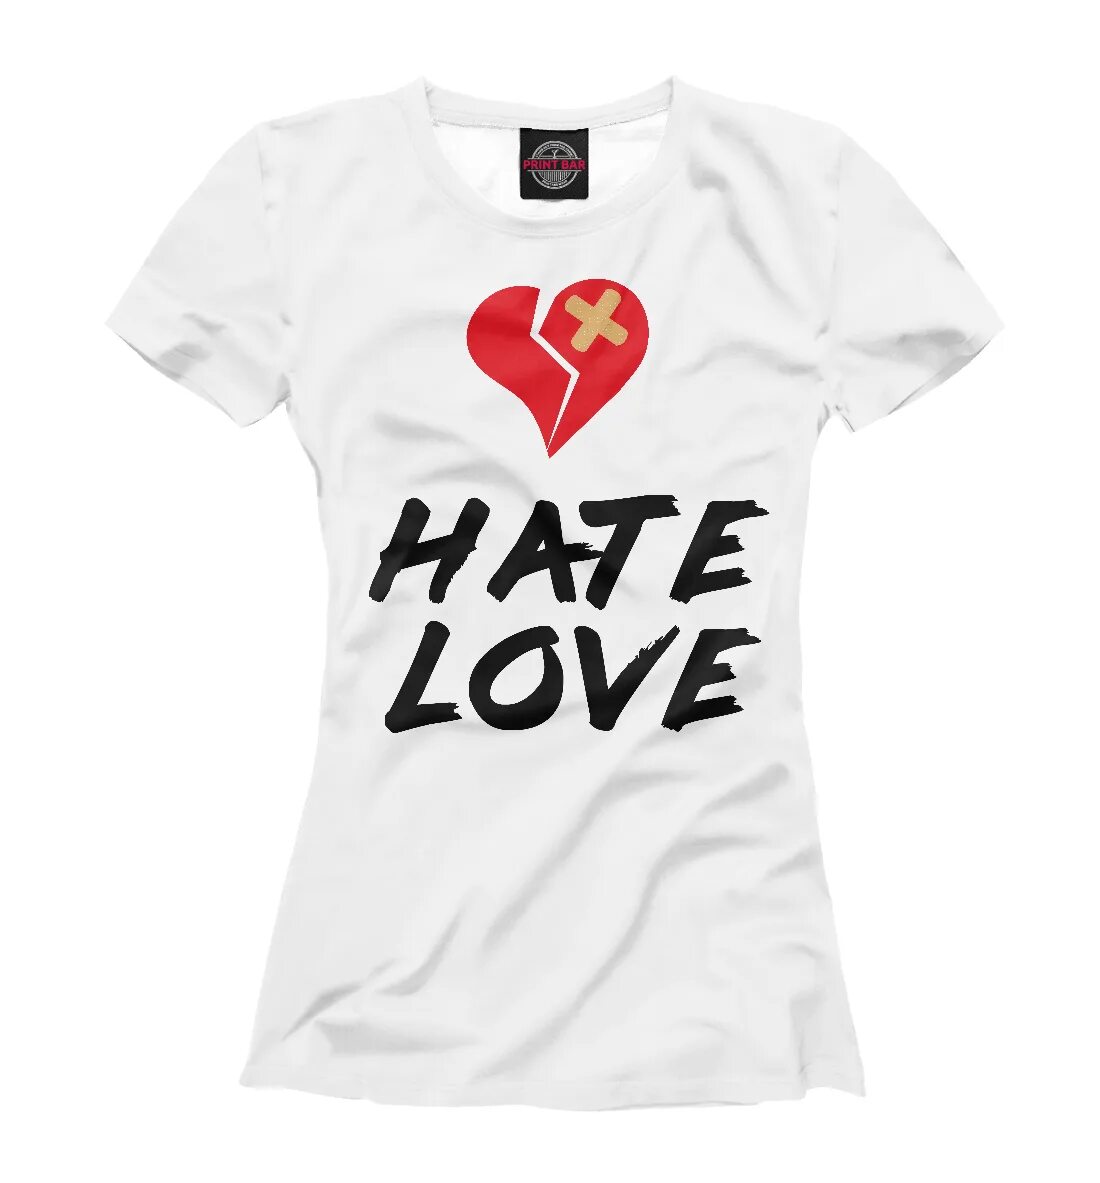 Life is hate. Футболка женская Love. Футболка hate. Женская футболка 'hate'. Love hate принты.